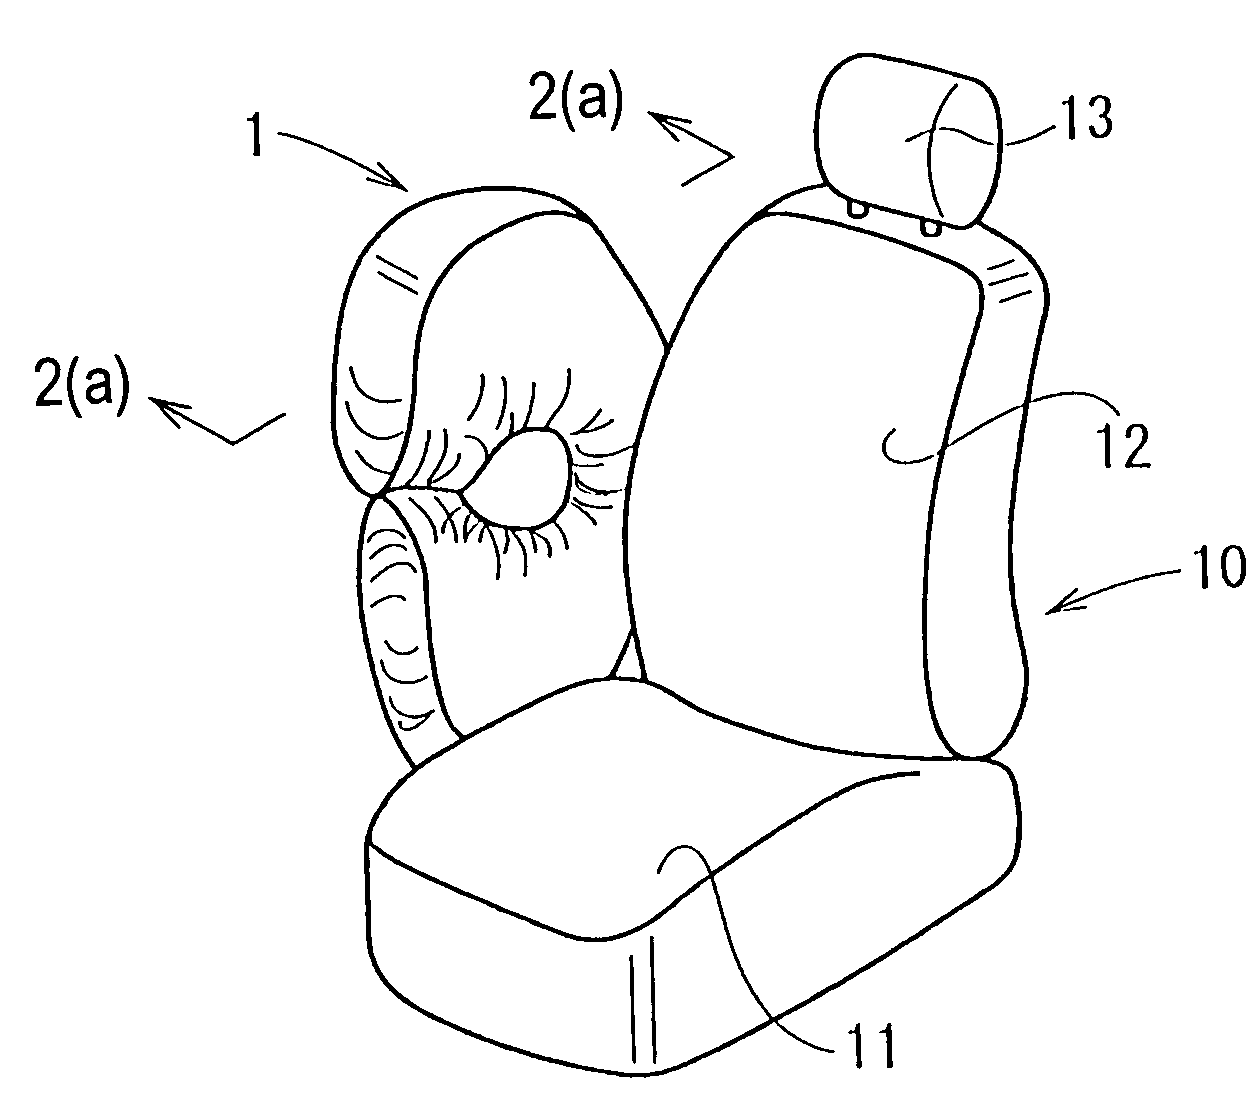 Airbag apparatus